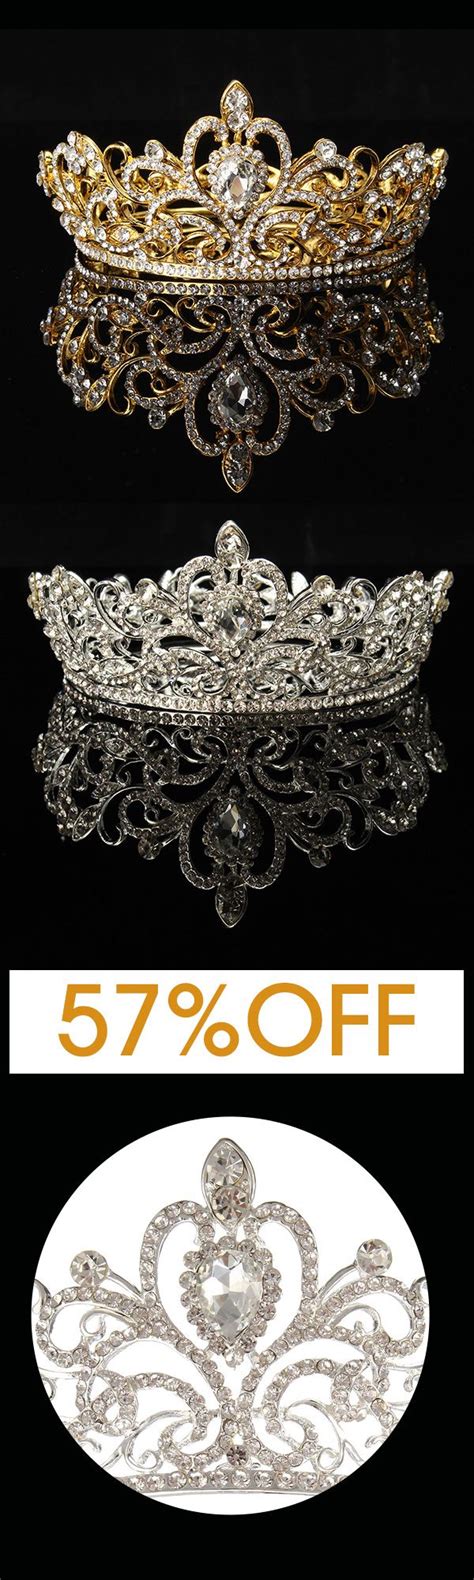 57 Offandfree Shipping Bride Gold Silver Rhinestone Crystal Crown Tiara